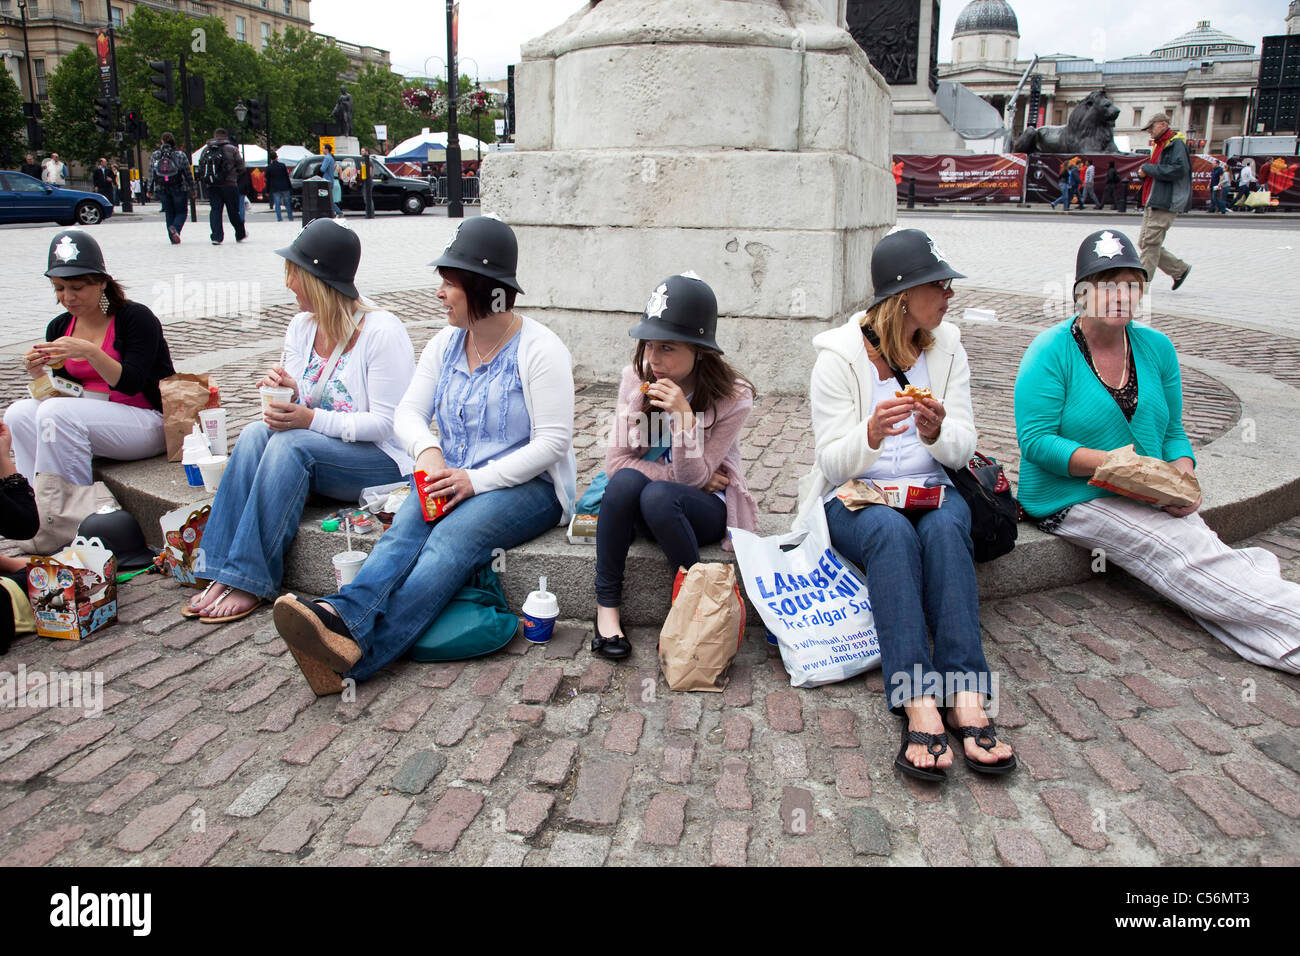 Group tourists eat their McDonalds in Trafalgar Square, London. All wearing tourist gift plastic policeman's helmets. UK. Stock Photo